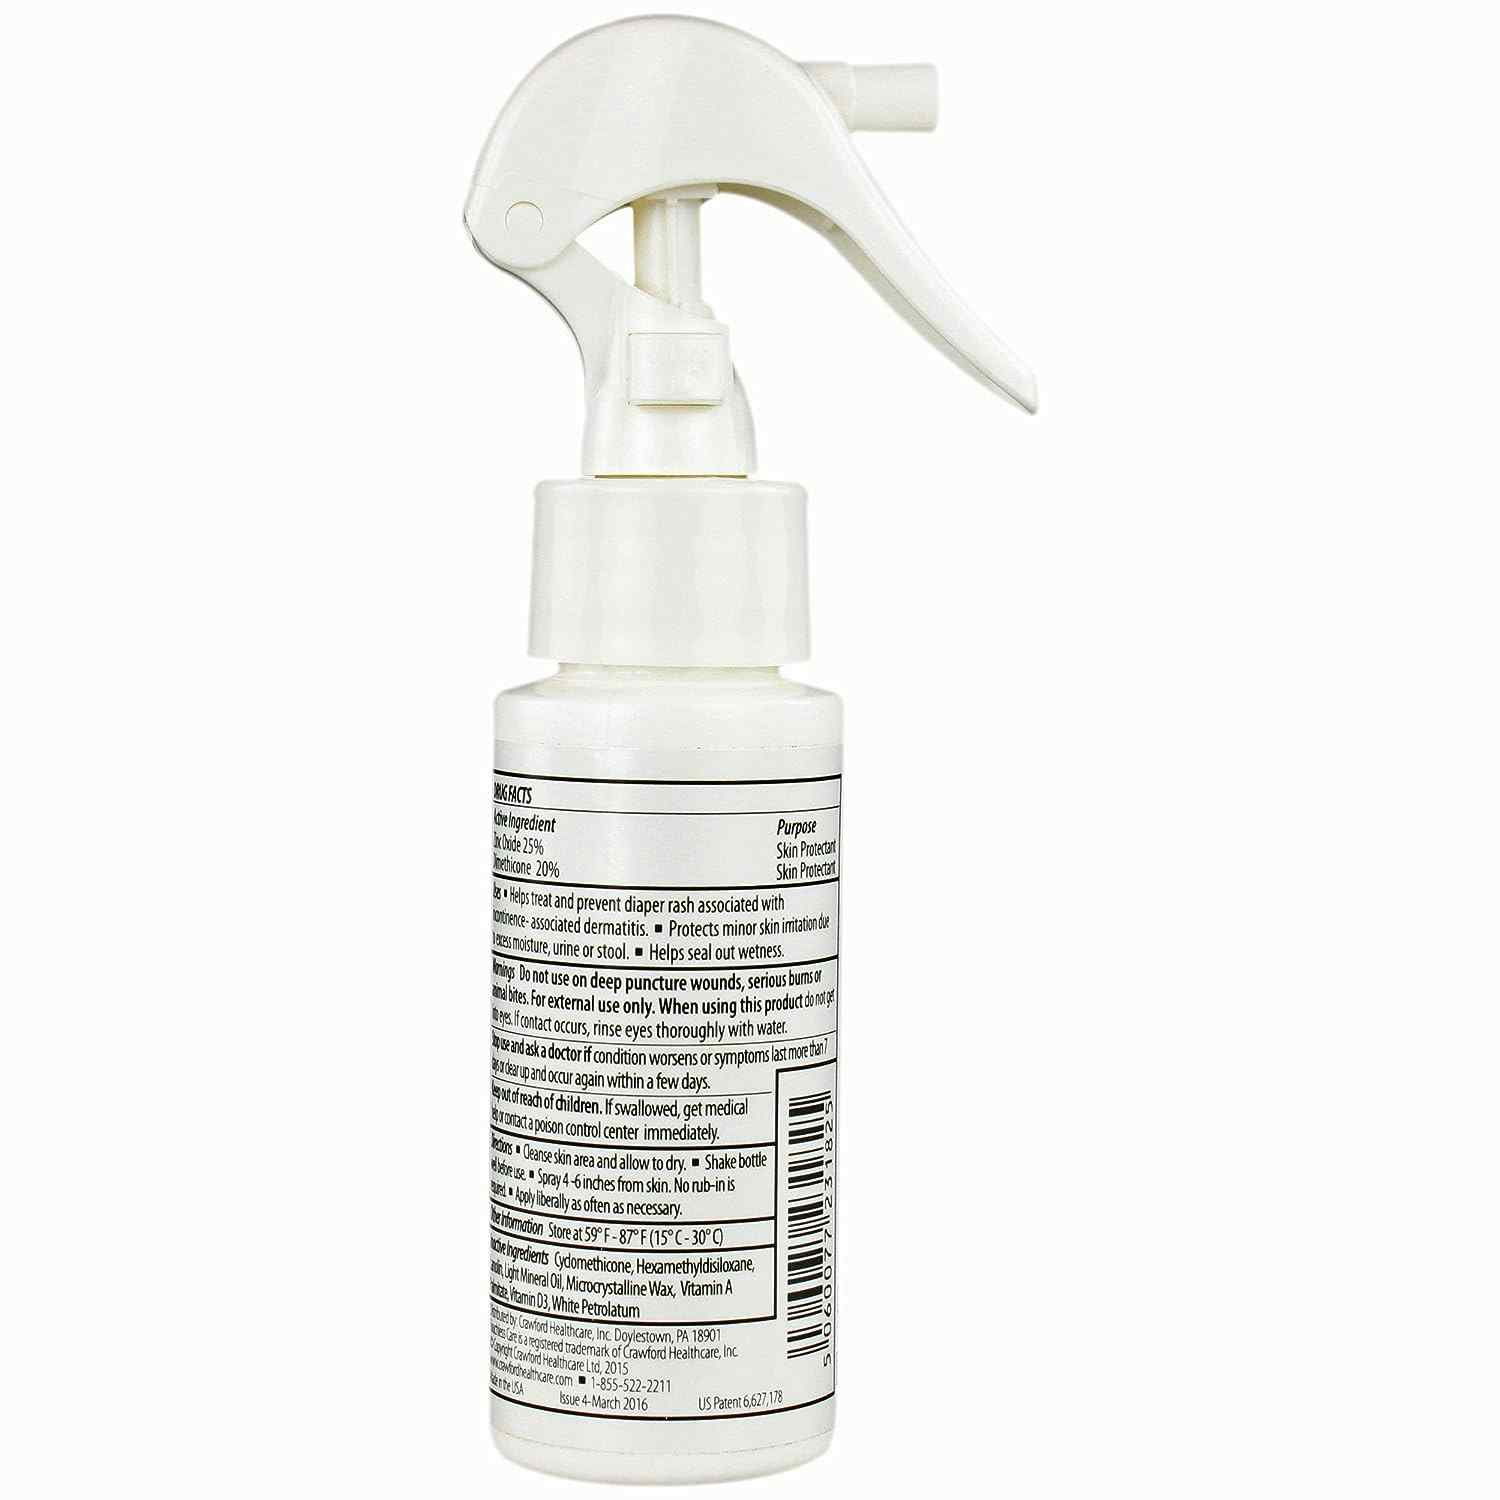 Rash Relief Skin Protectant, Scented, 2 oz., 62402, 1 Bottle